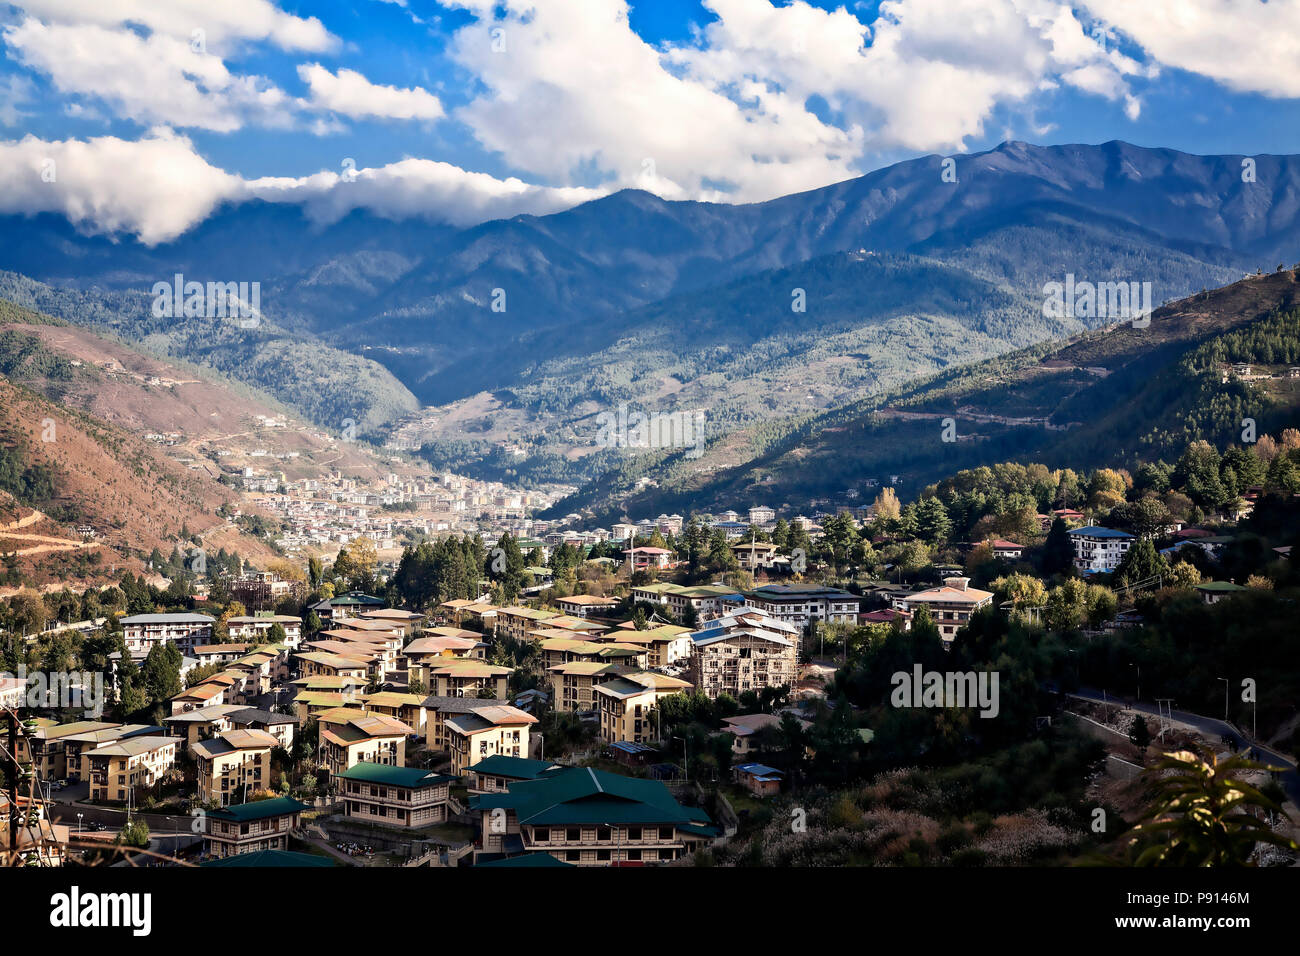 La città capitale di Thimphu nei foothills dell'Himalaya, Bhutan. Foto Stock